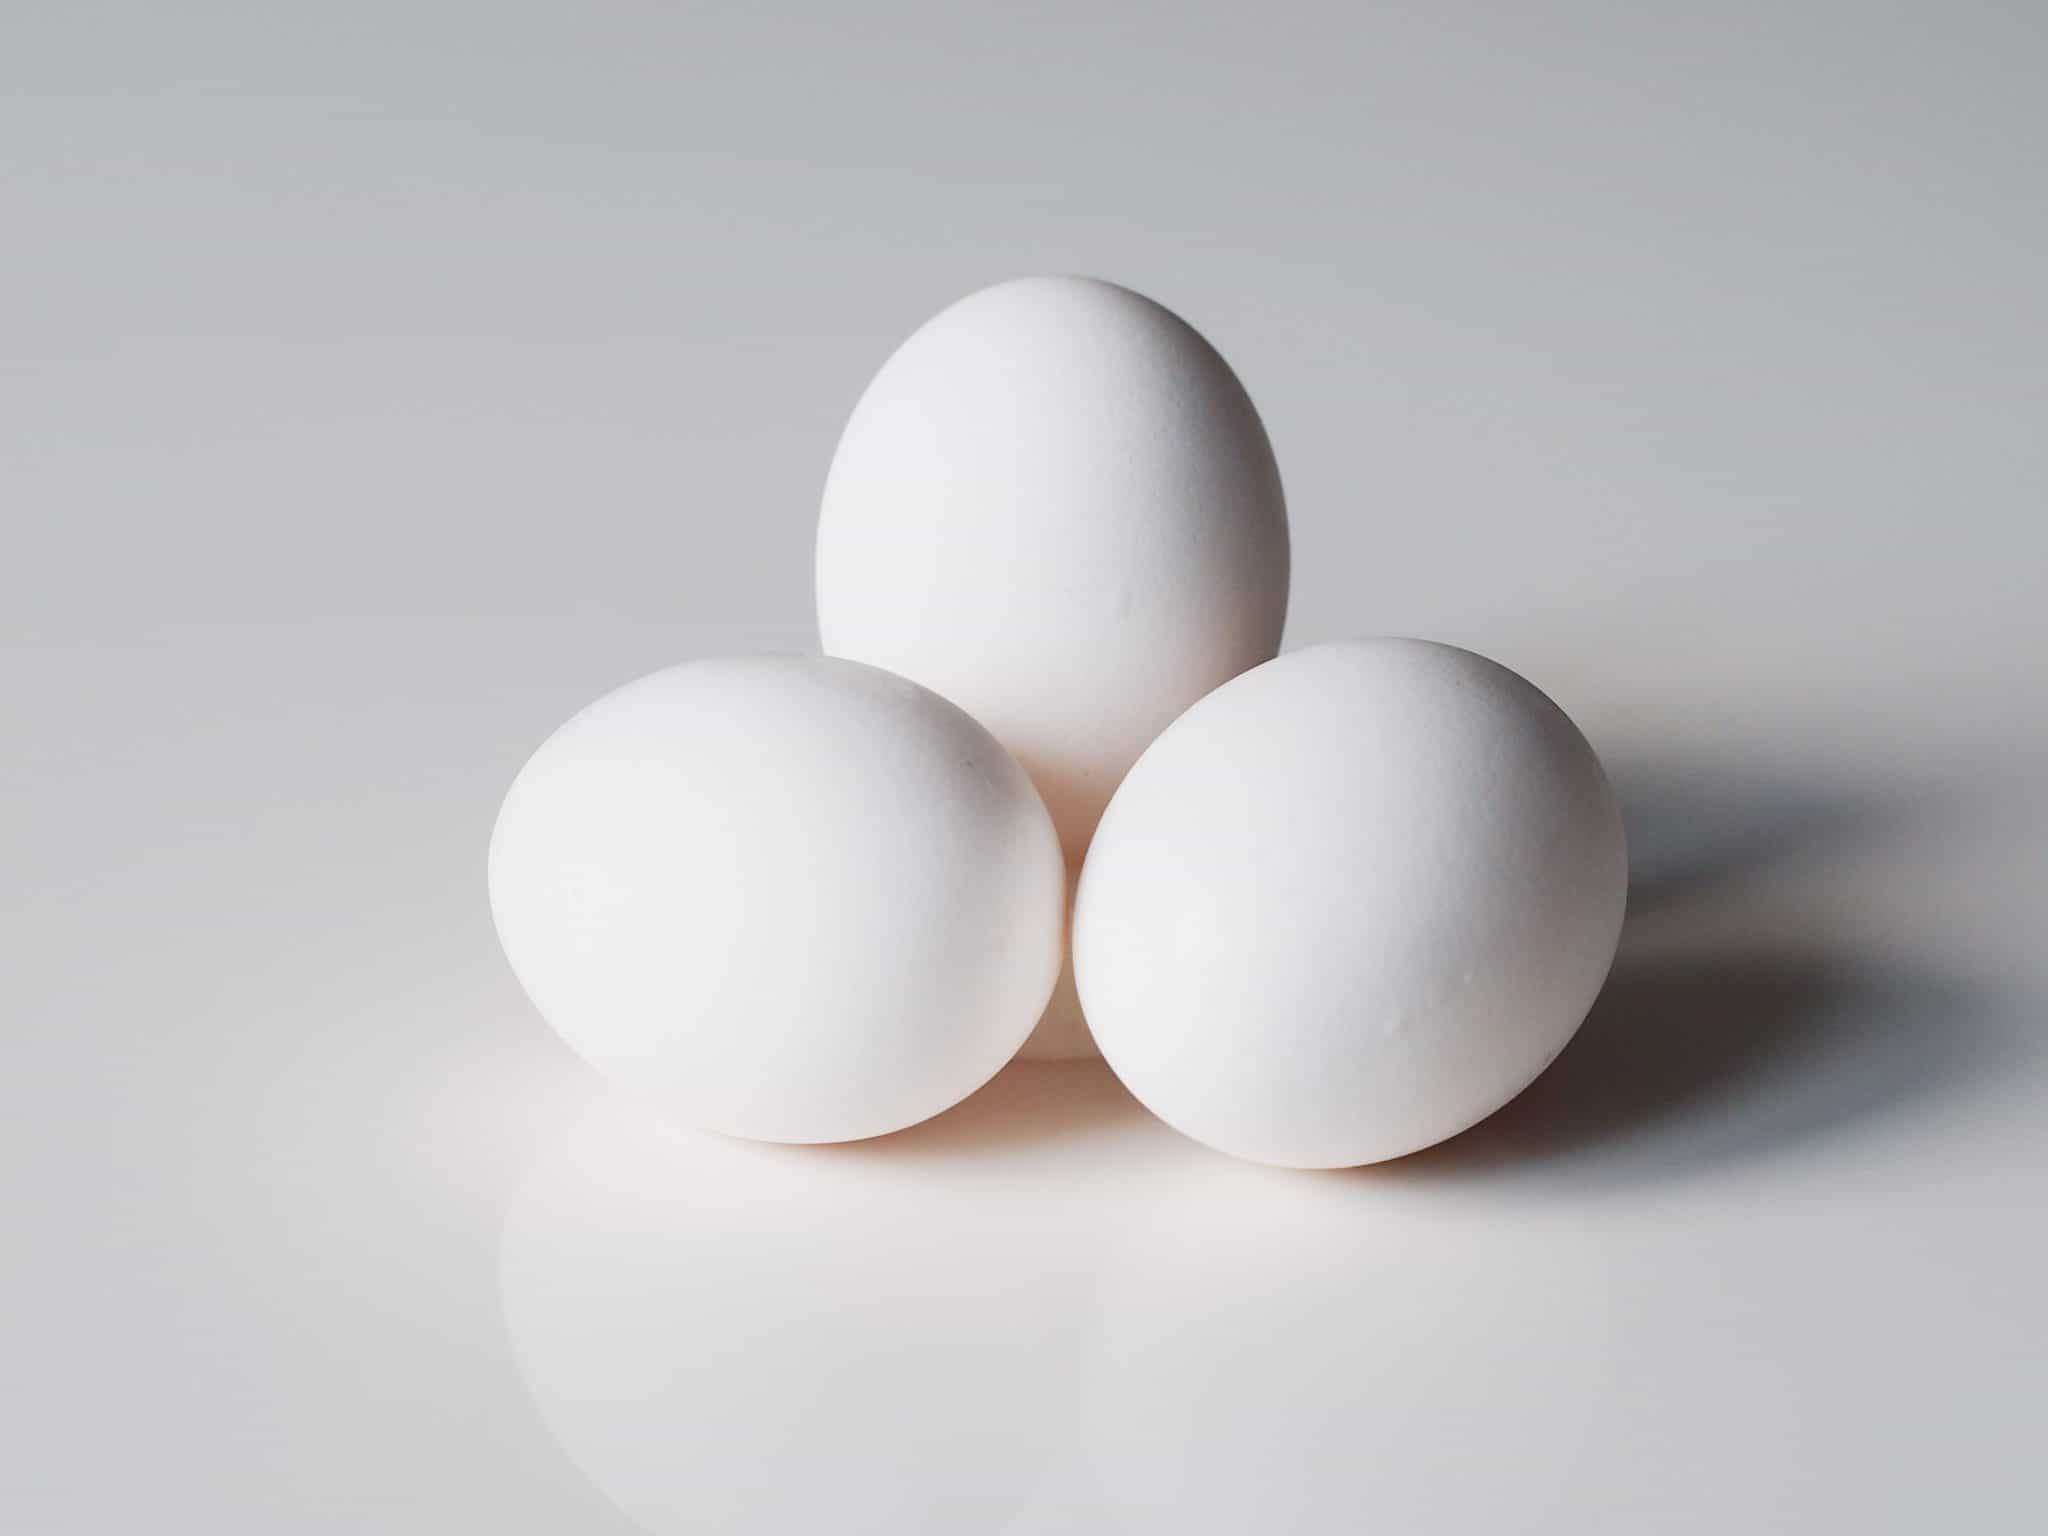 Egg, What International Students Eat